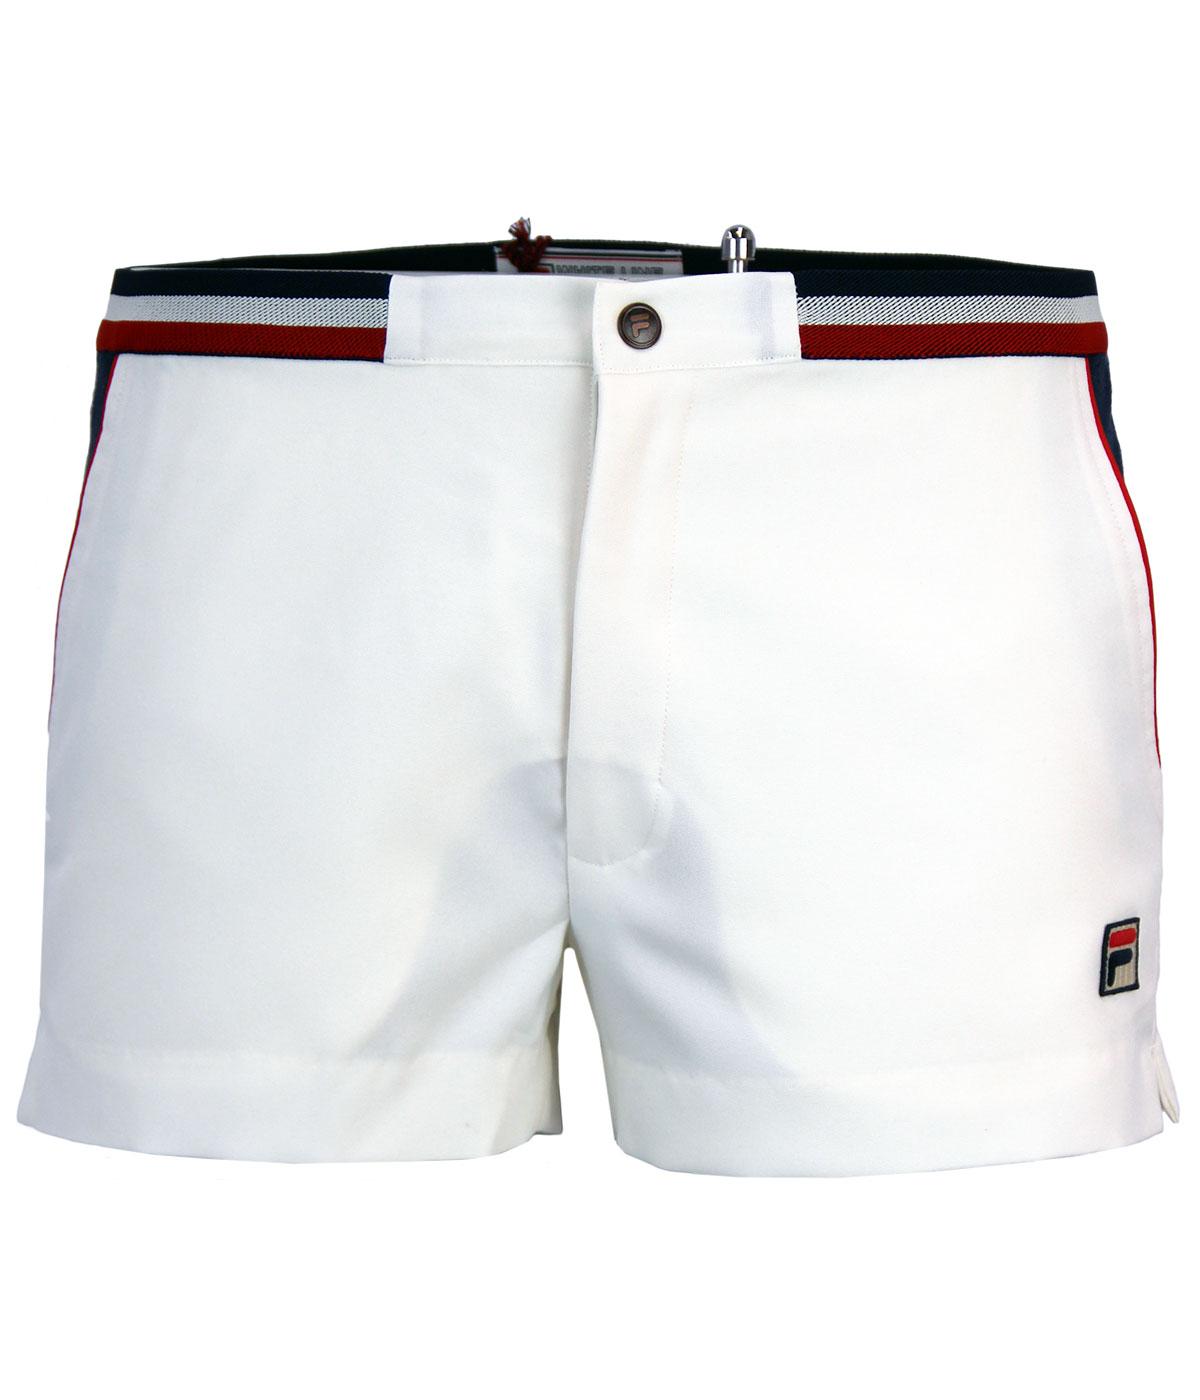 Retro tennis shorts